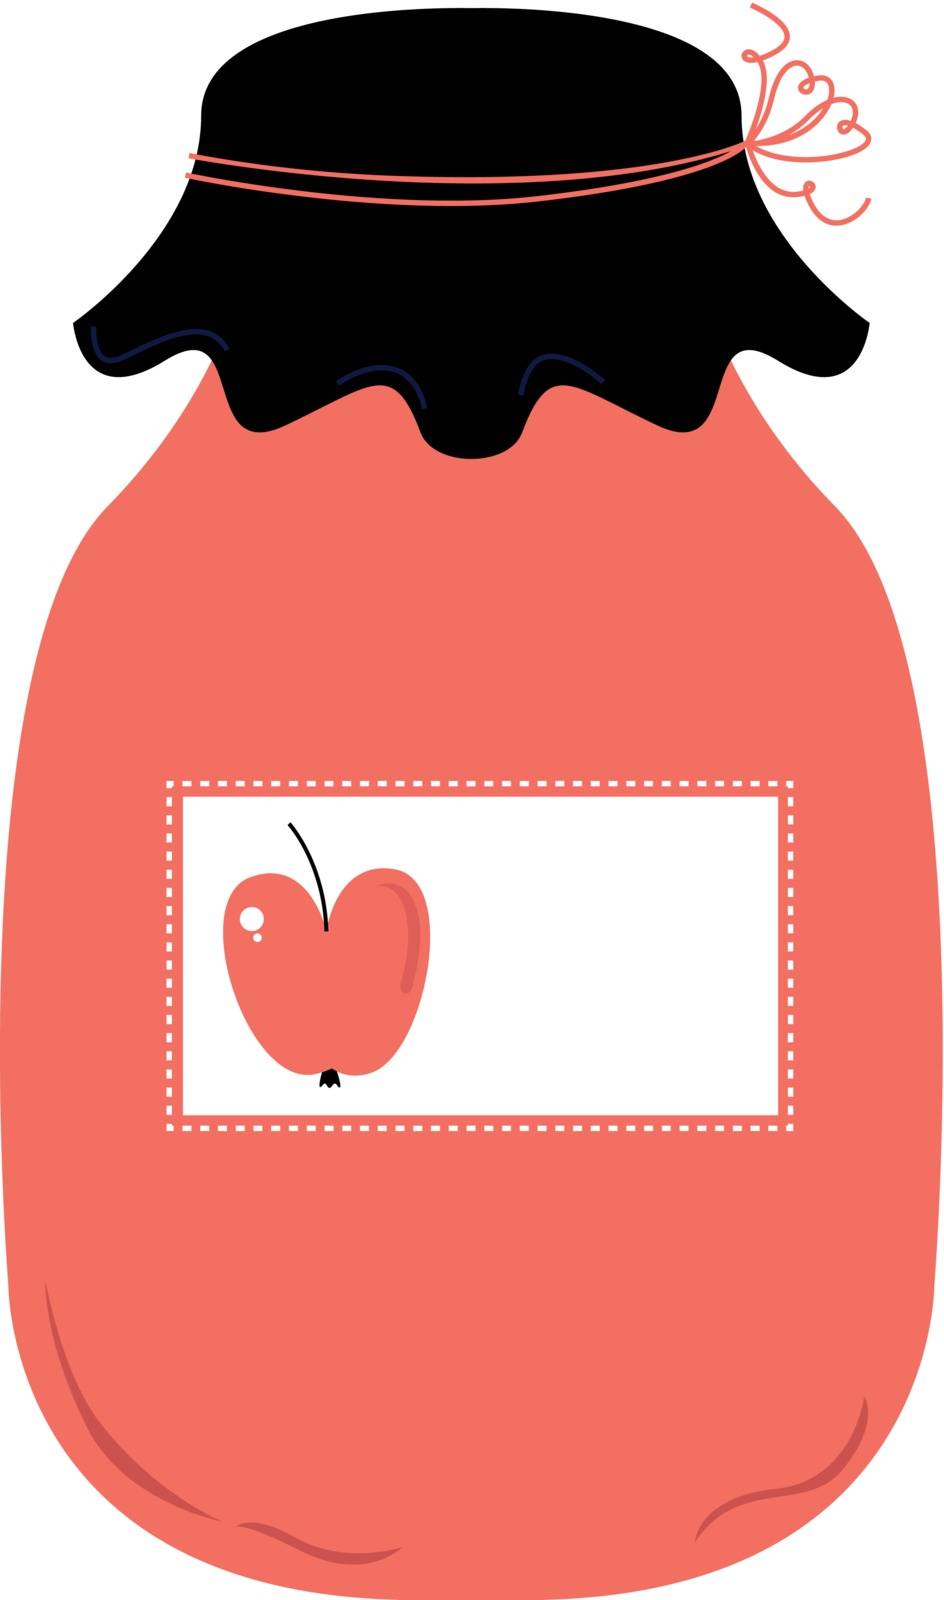 Jam Jar : Stylish apple jar original illustration for Creative project by Lordalea